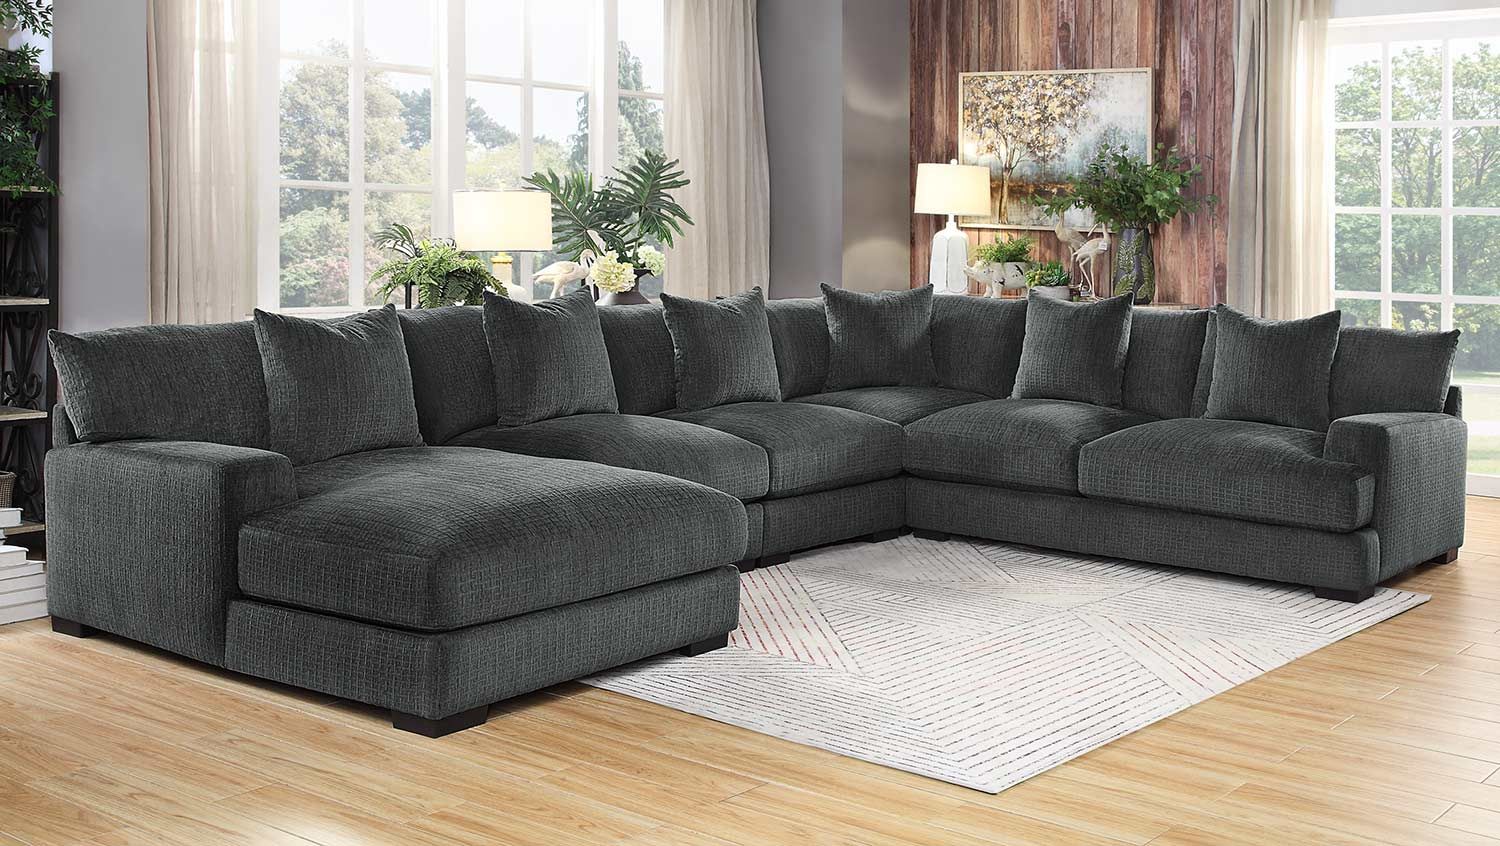 Homelegance Worchester Sectional Sofa Set – Dark Gray 9857dg Sofa Set Regarding Sofas In Dark Grey (View 6 of 20)